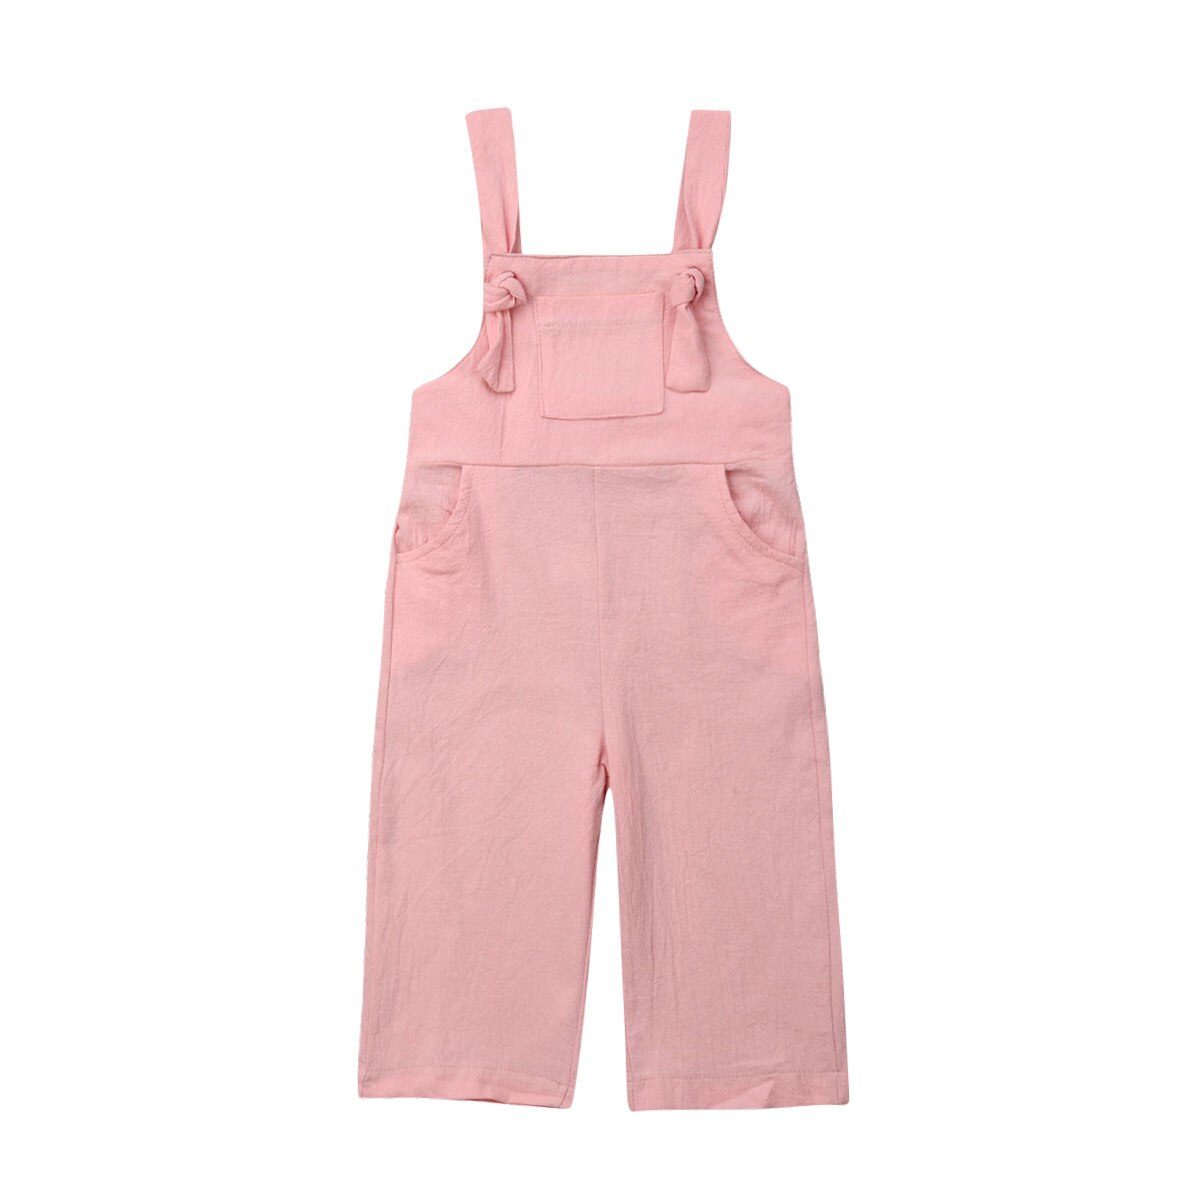 Toddler kid baby piger sommer overalls knude strappy ensfarvet linnebukser lange bukser tøj 1-6t: Lyserød / 3t